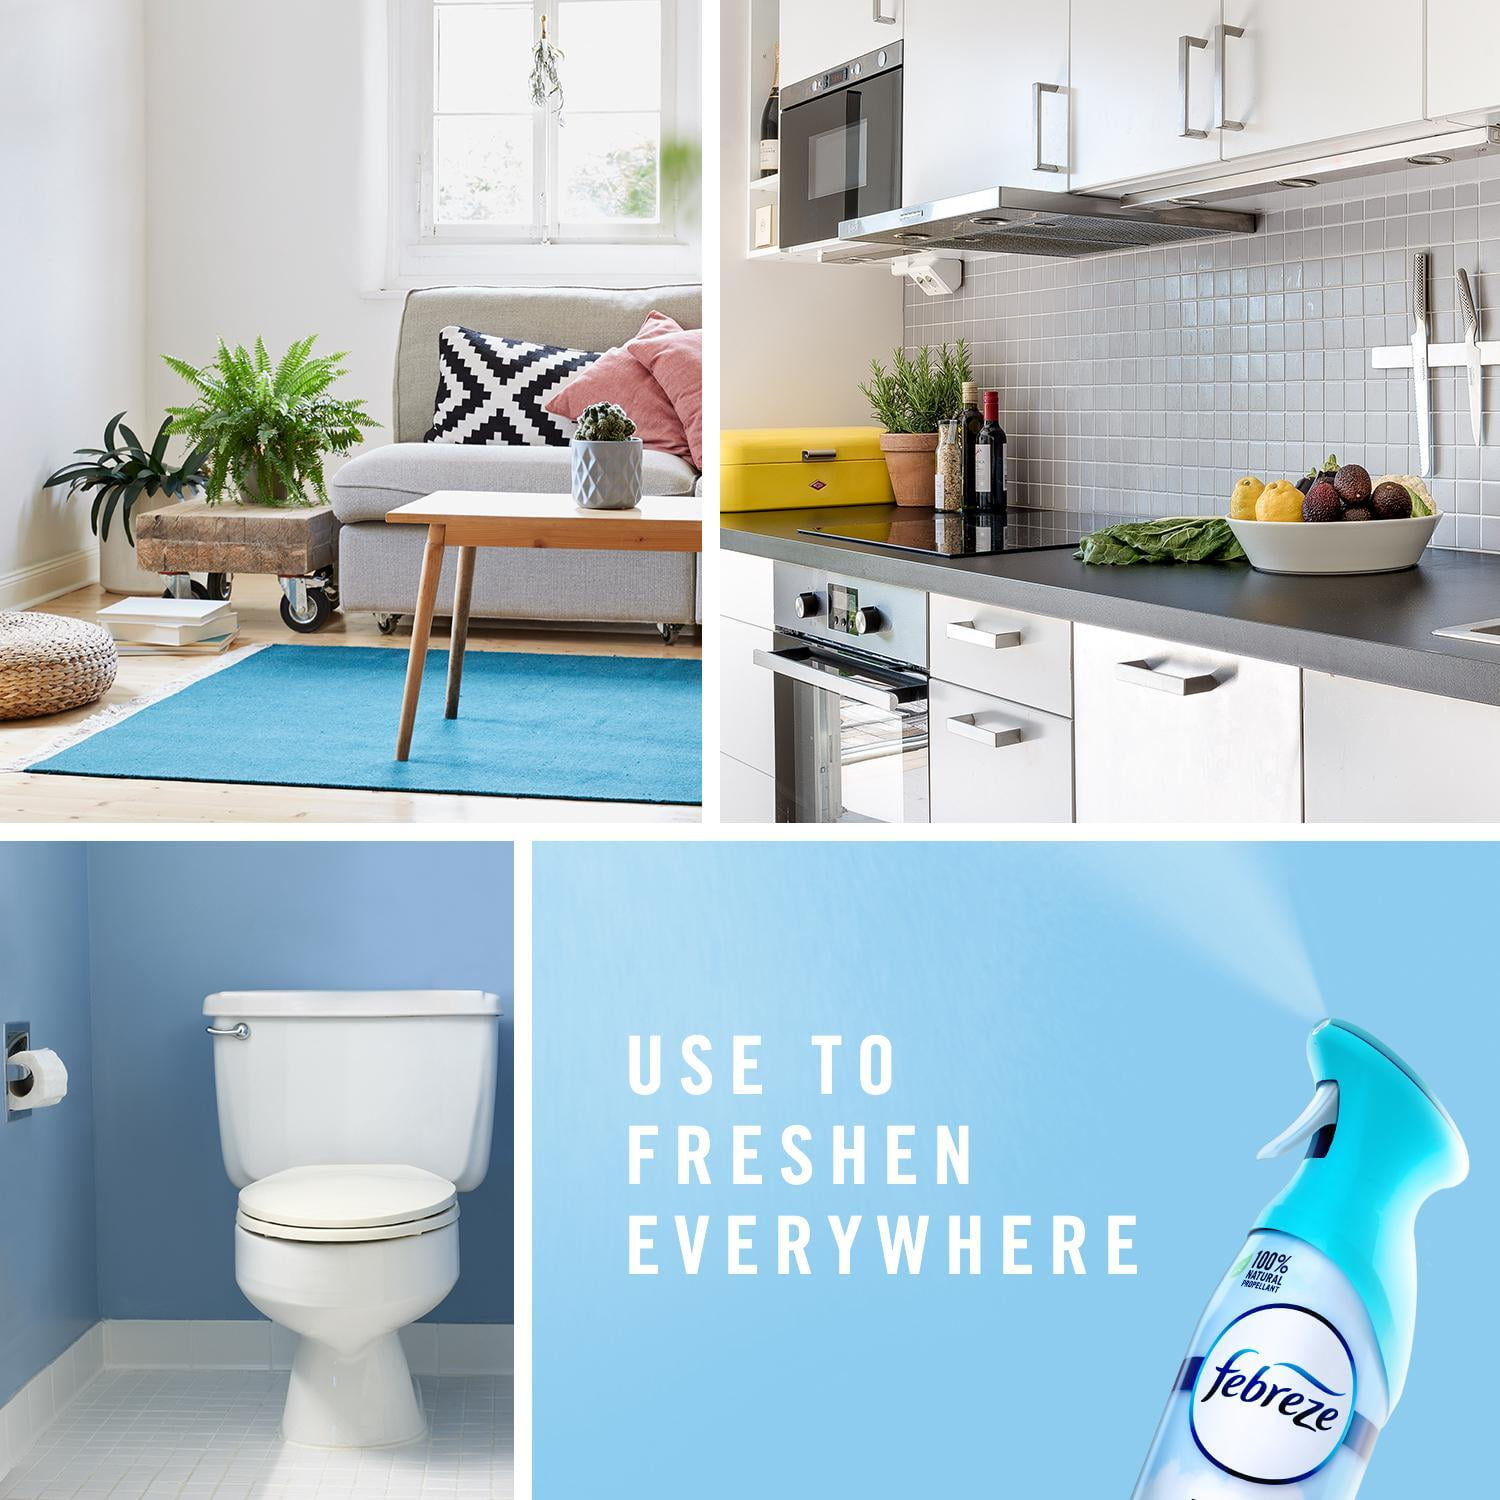 Febreze Odor-Fighting Air Freshener, Heavy Duty Crisp Clean, Pack of 2, 8.8  fl oz each